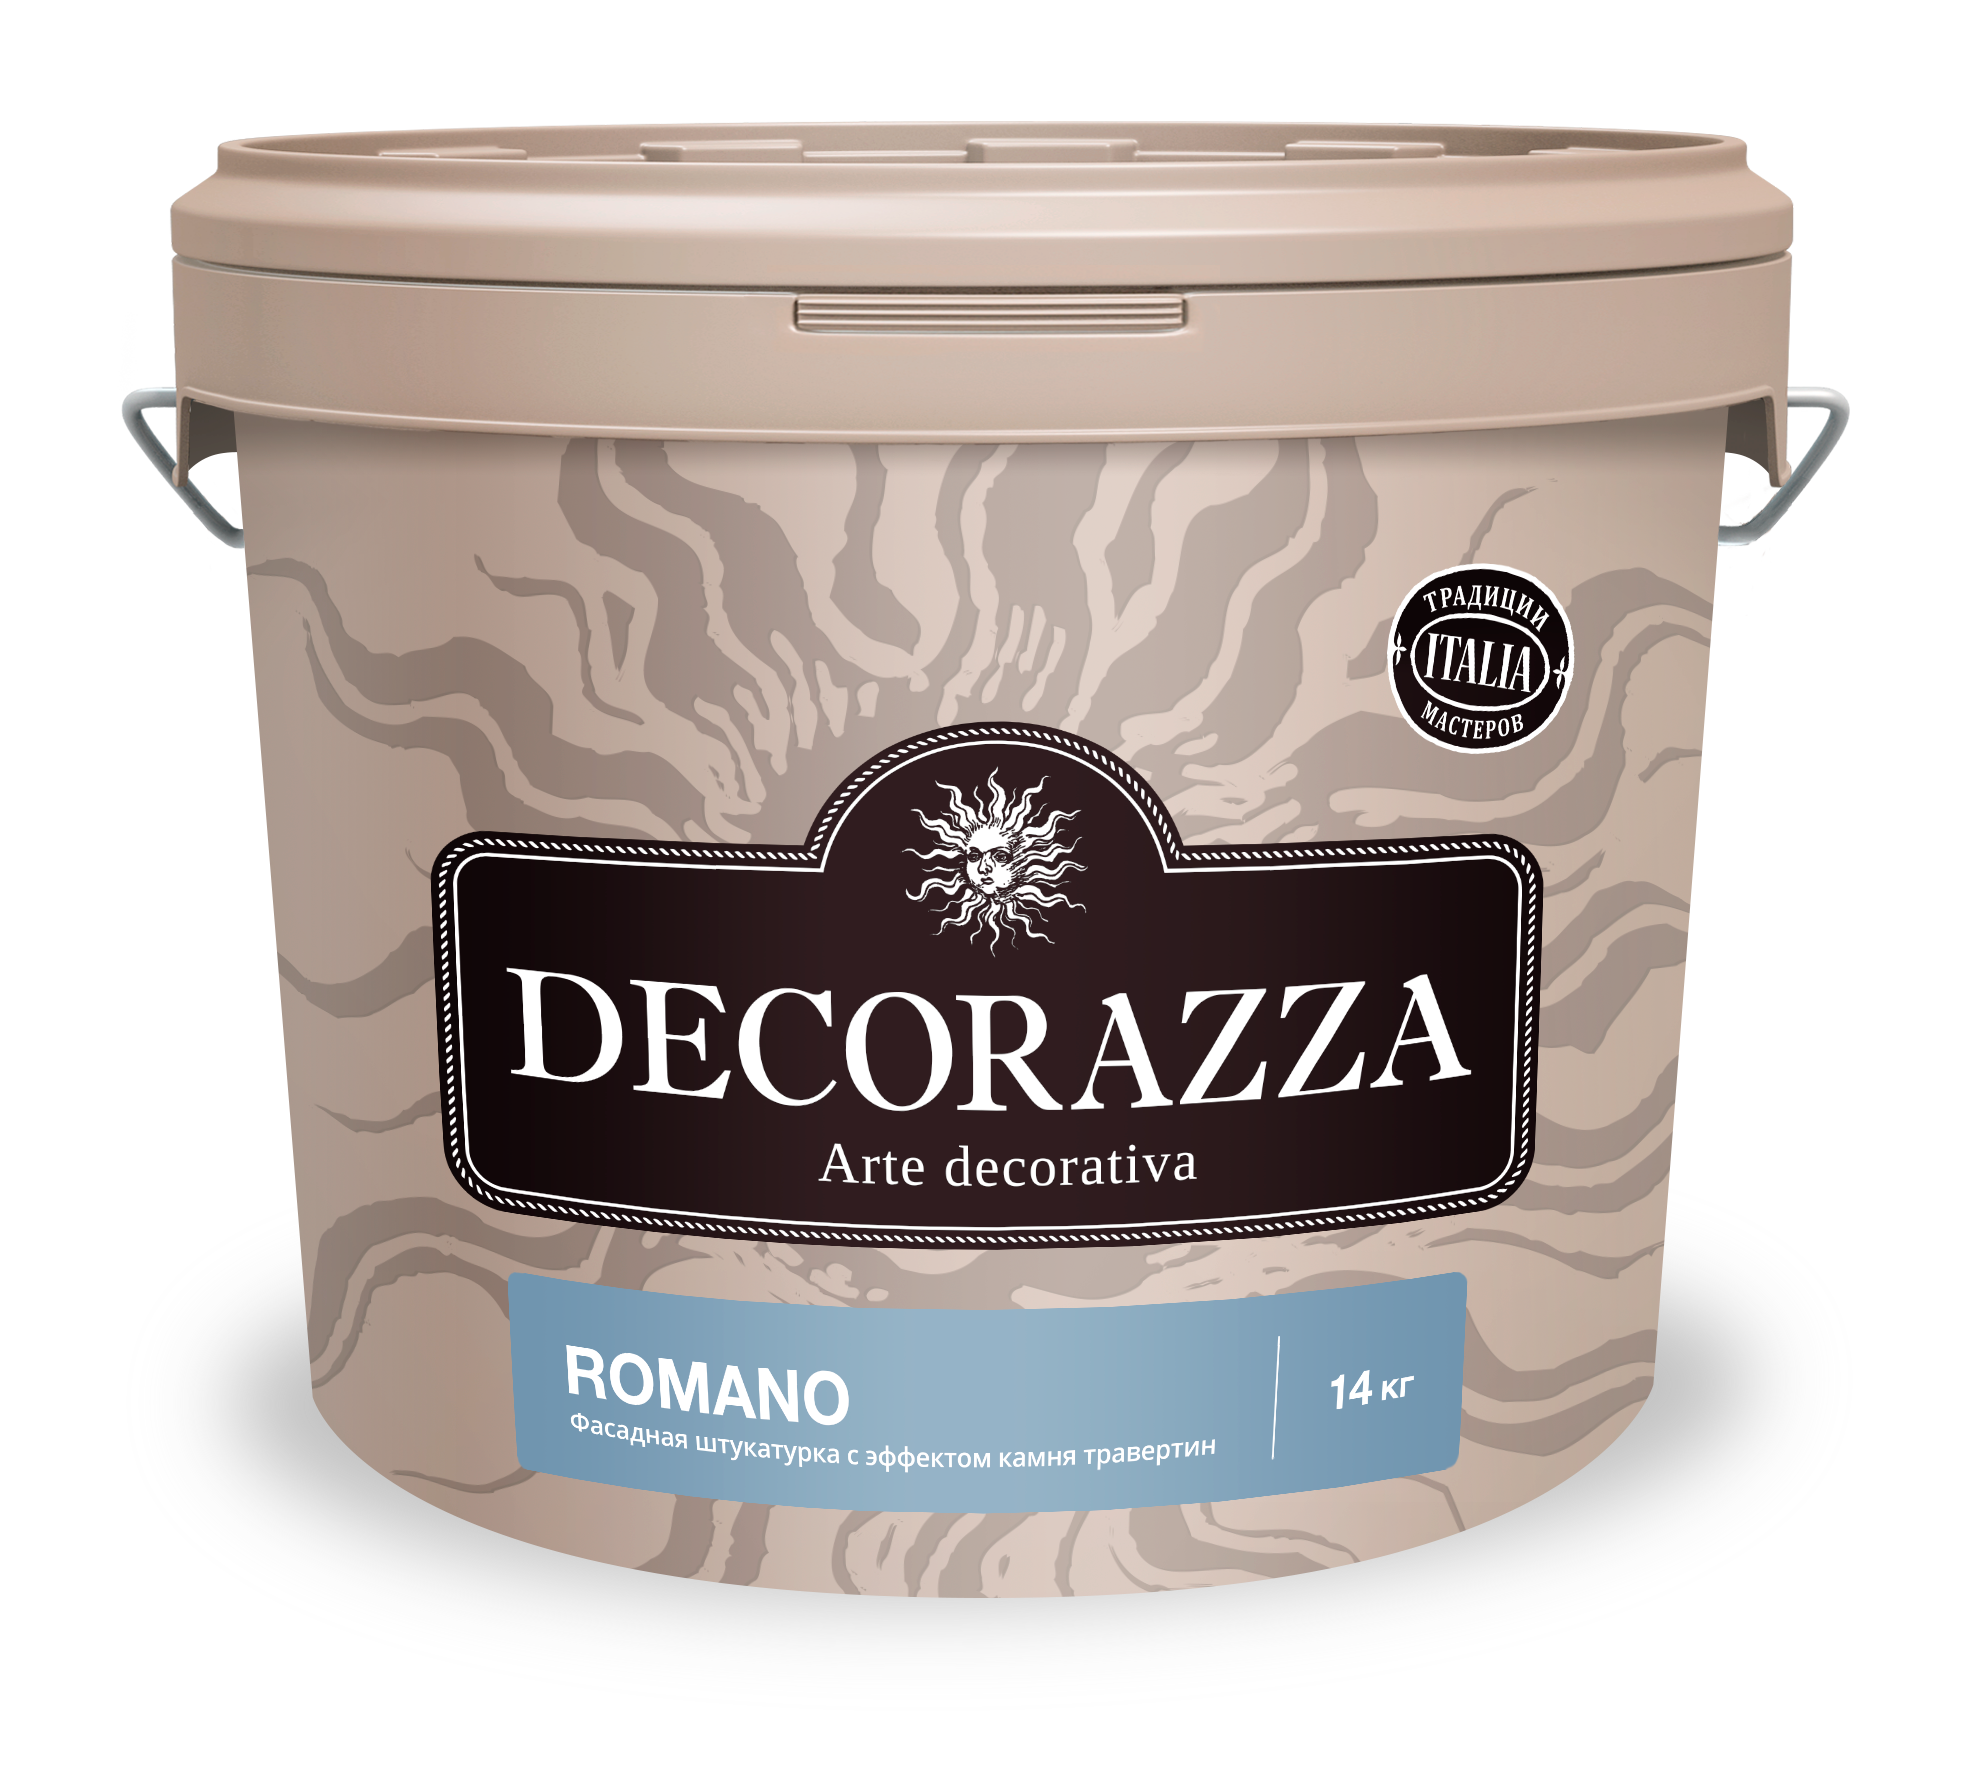 Декоративная штукатурка Decorazza Romano RM 001, 14 кг декоративная штукатурка decorazza romano rm 001 14 кг